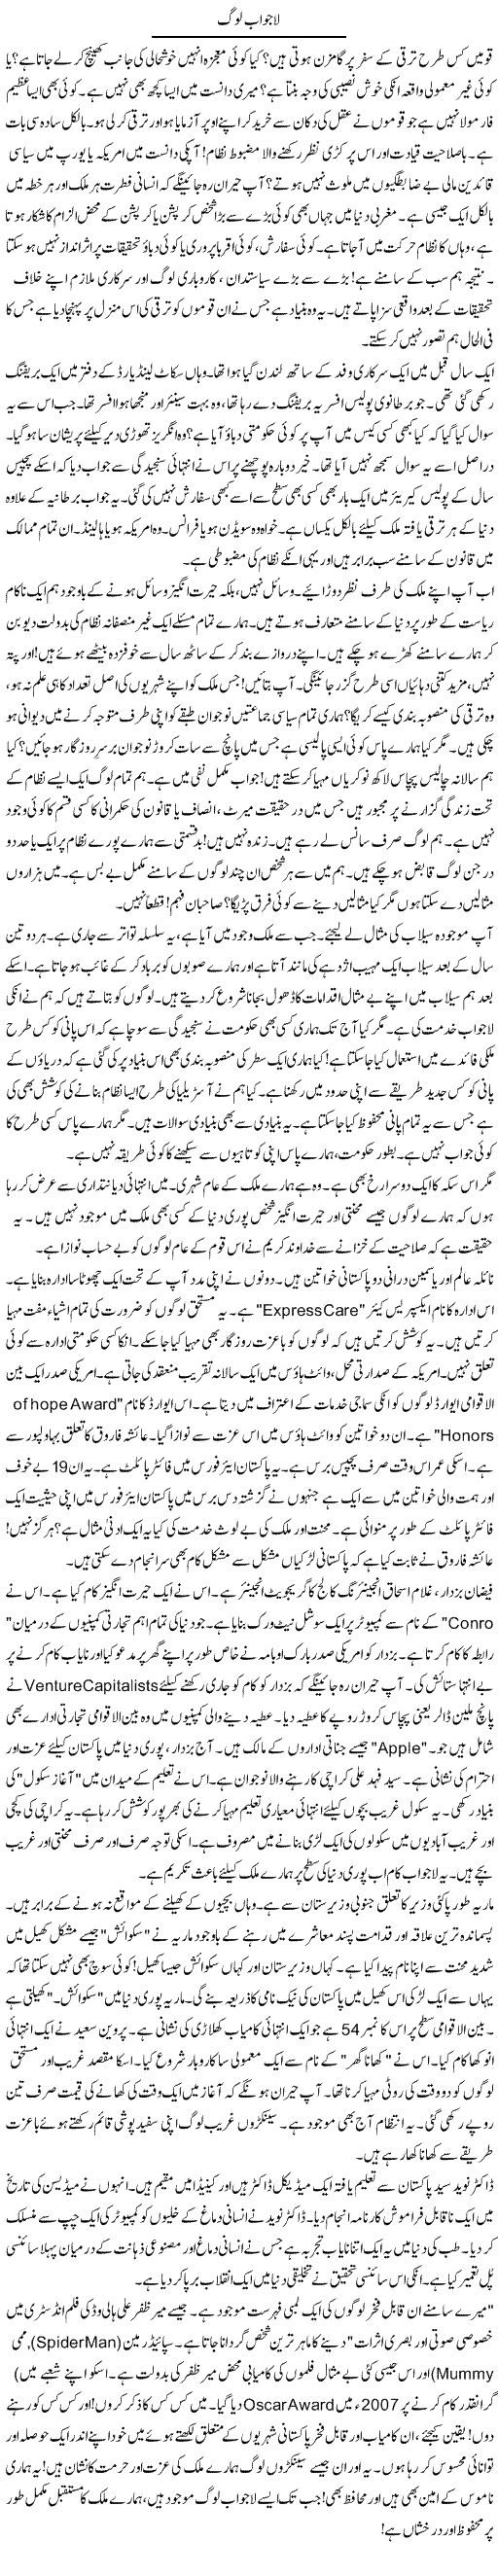 Lajawab Log | Rao Manzar Hayat | Daily Urdu Columns